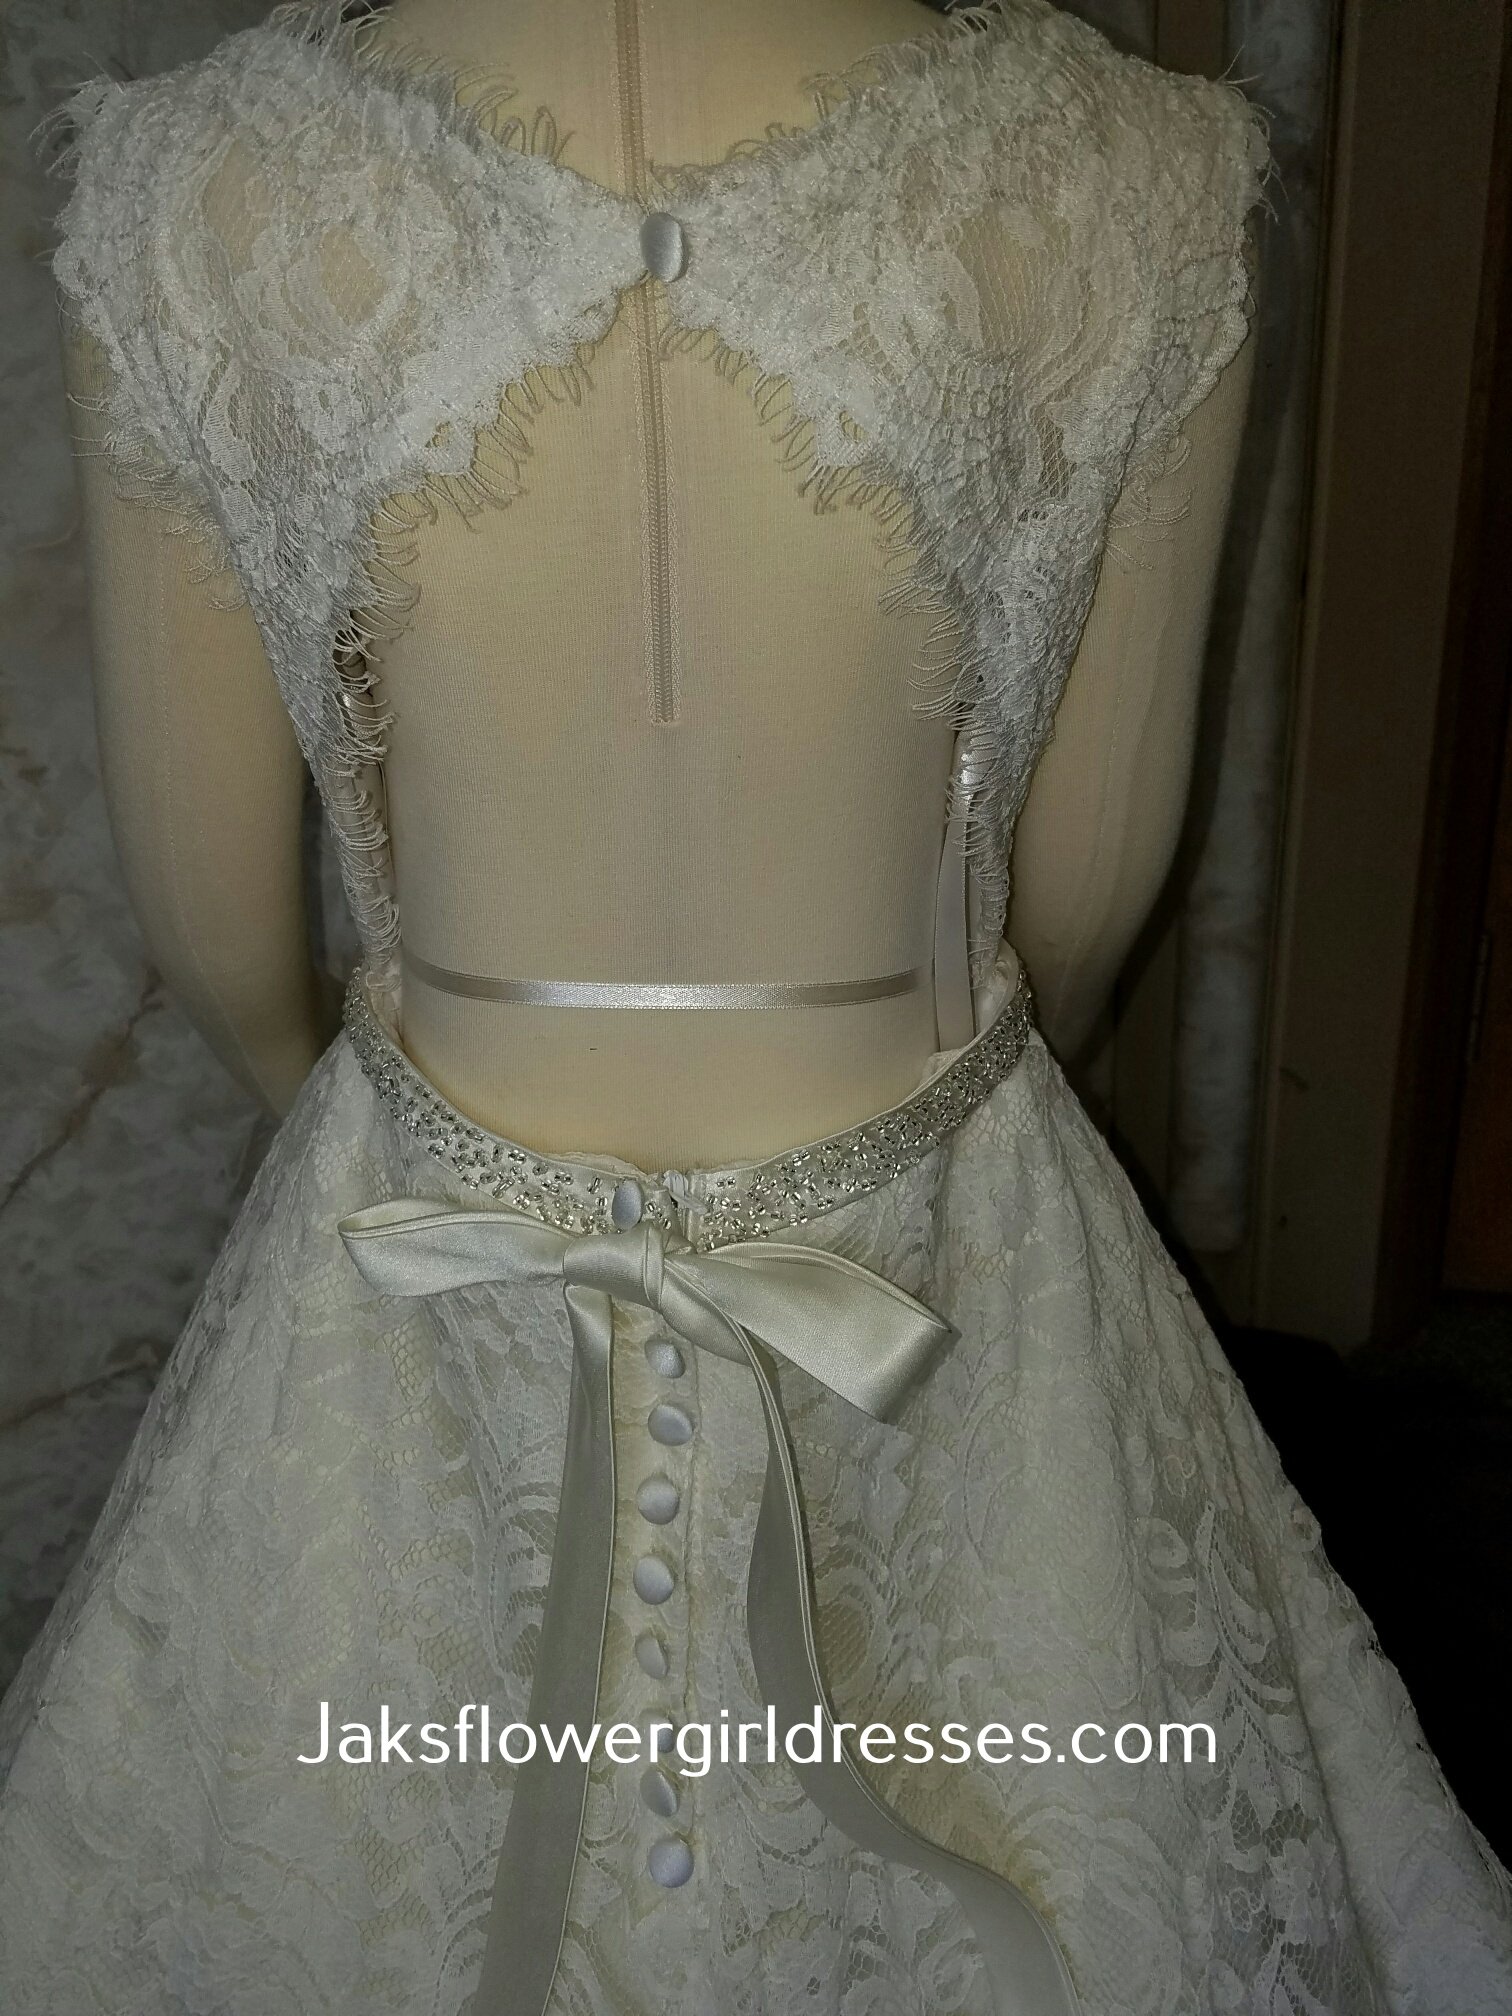 Match my lace open back wedding dress for my flower girls dress